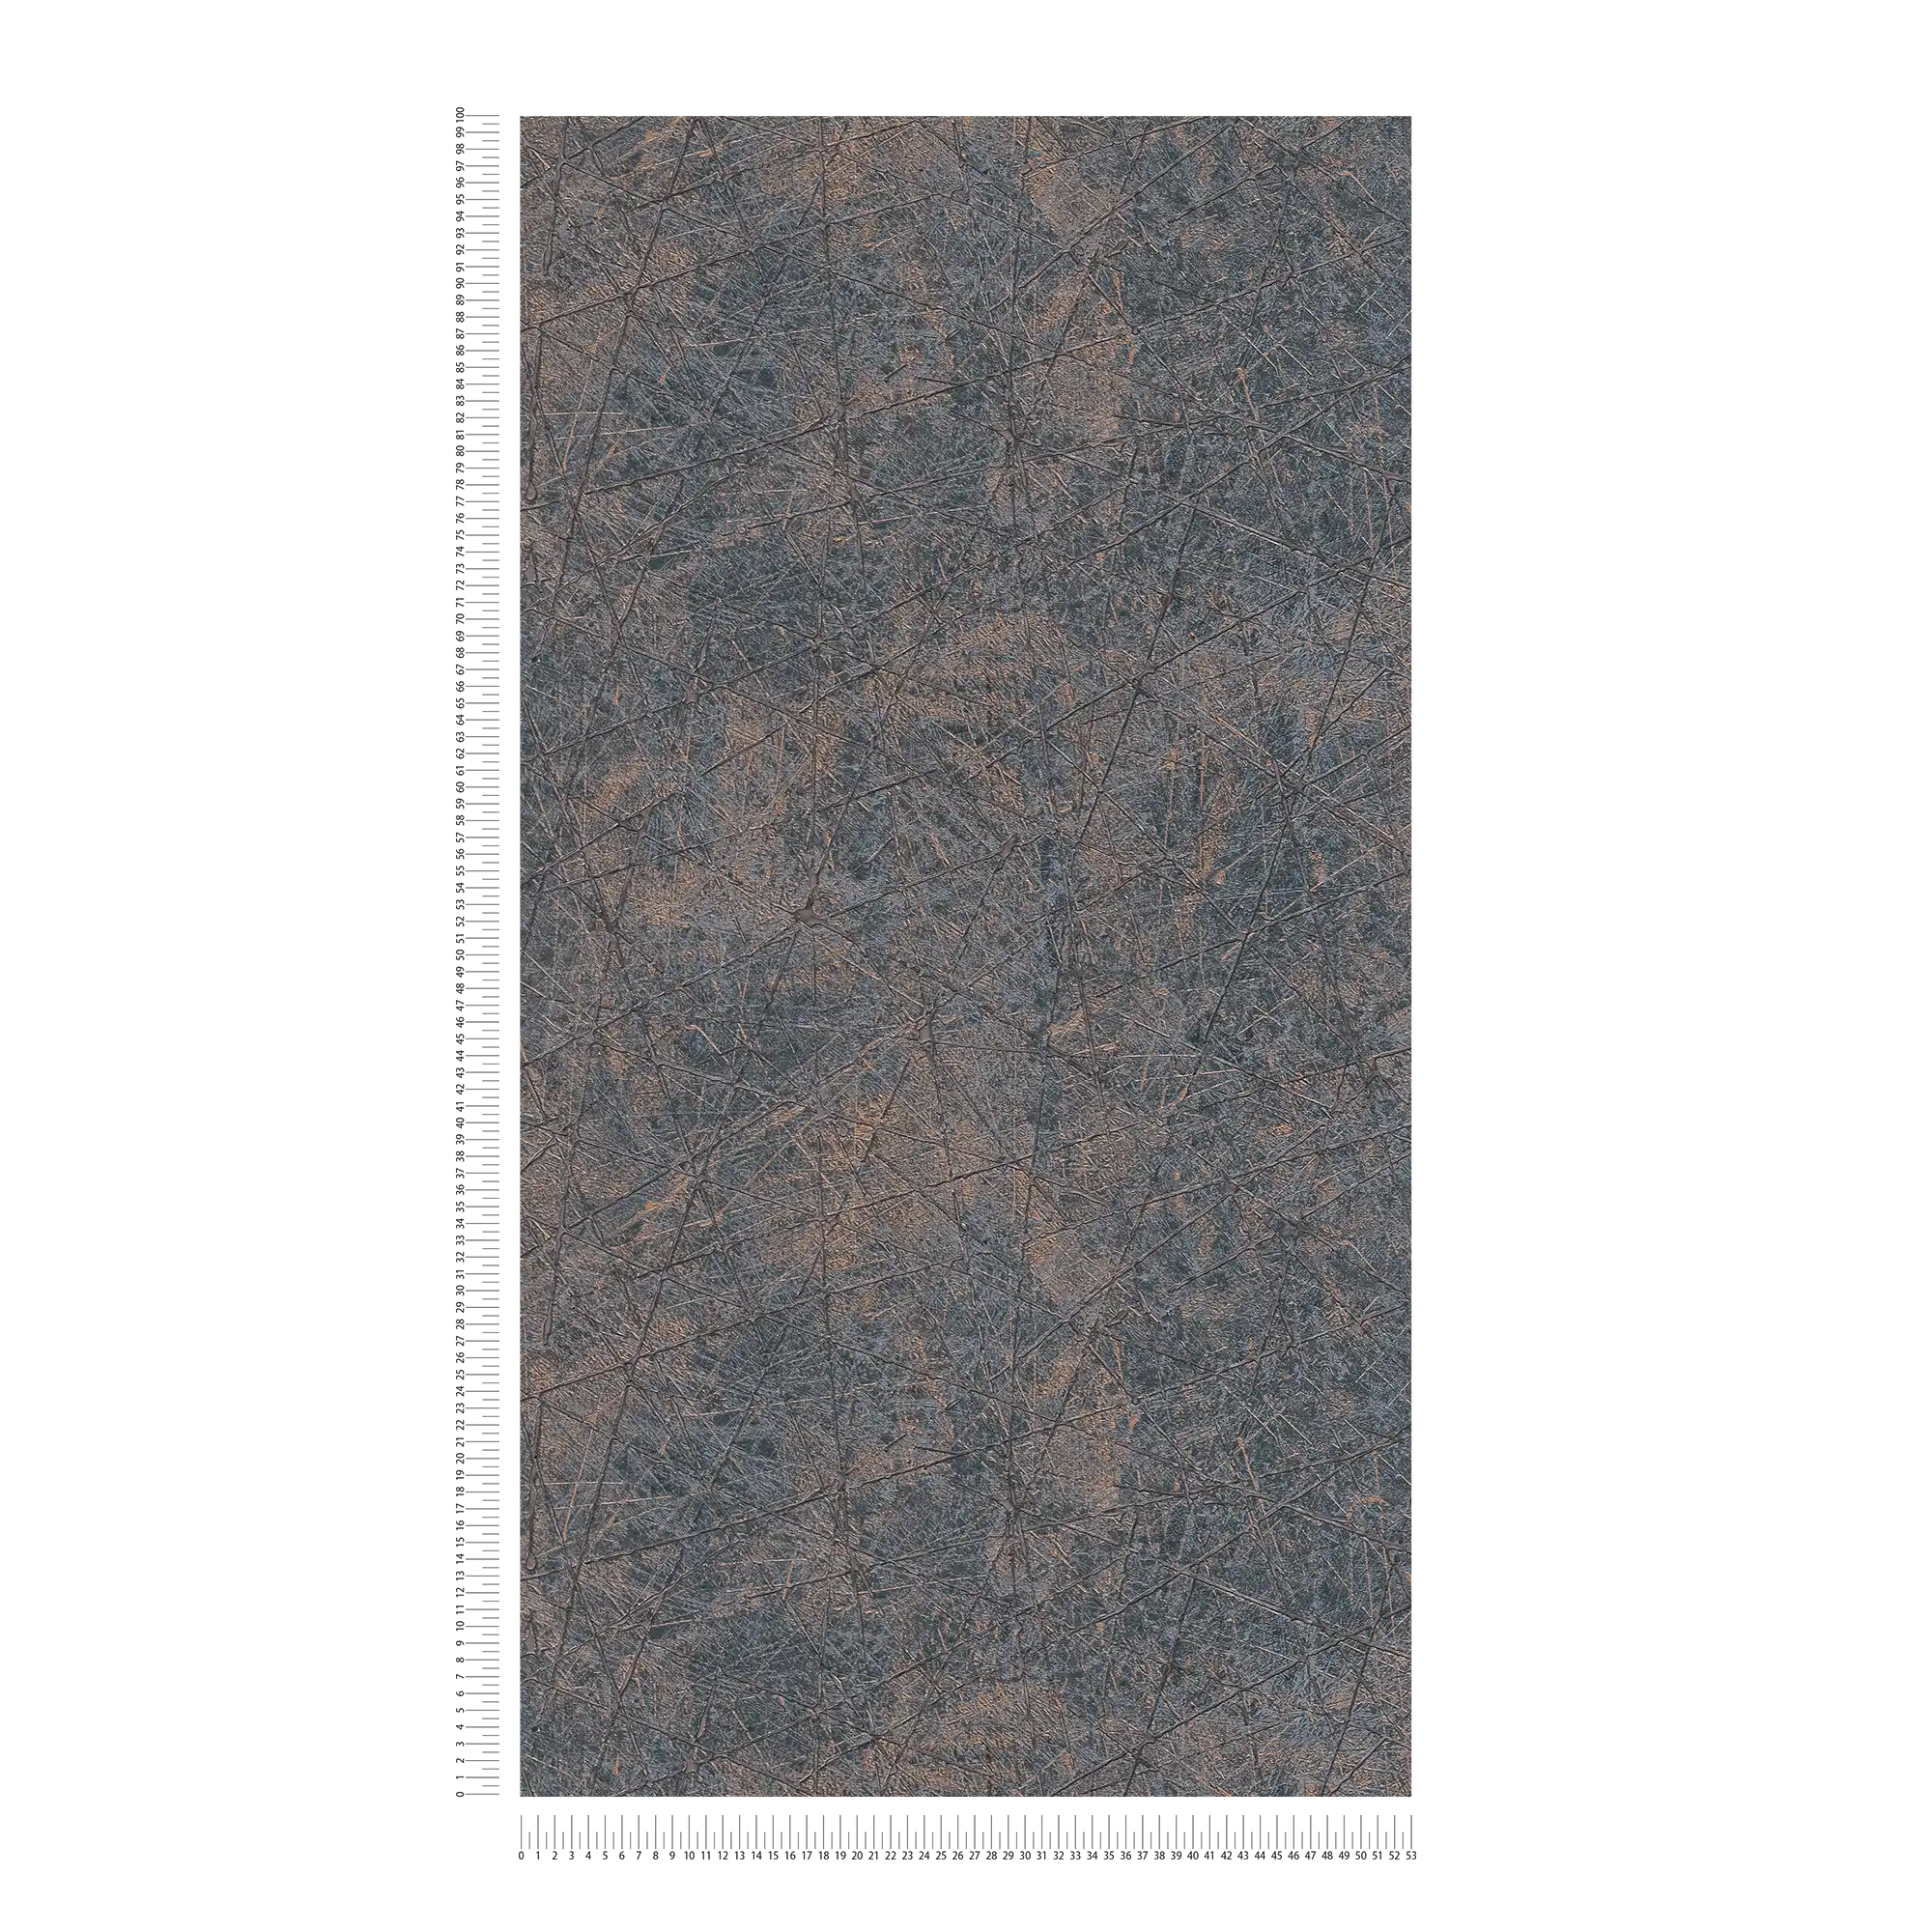             Metallic-look non-woven wallpaper with graphic line pattern - black, bronze
        